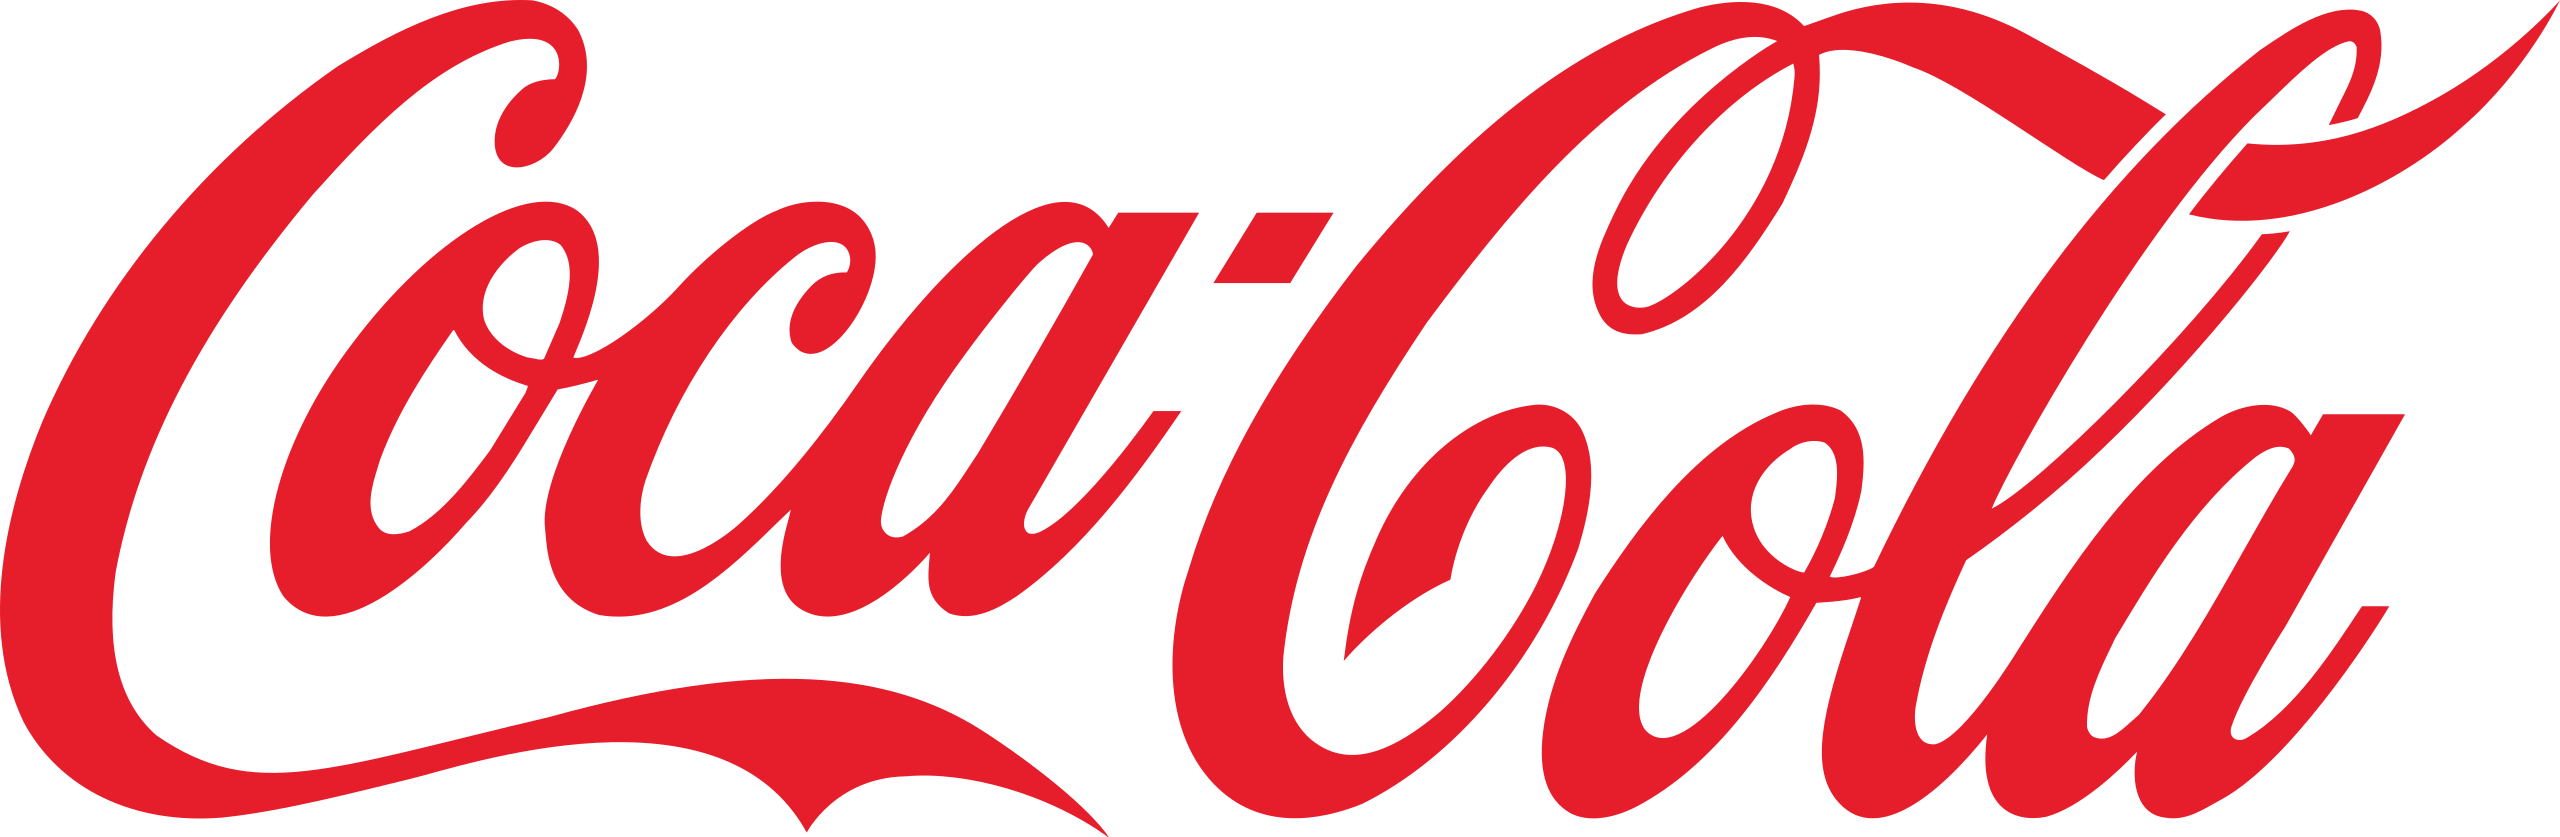 Coca-Cola_logo_femnepal